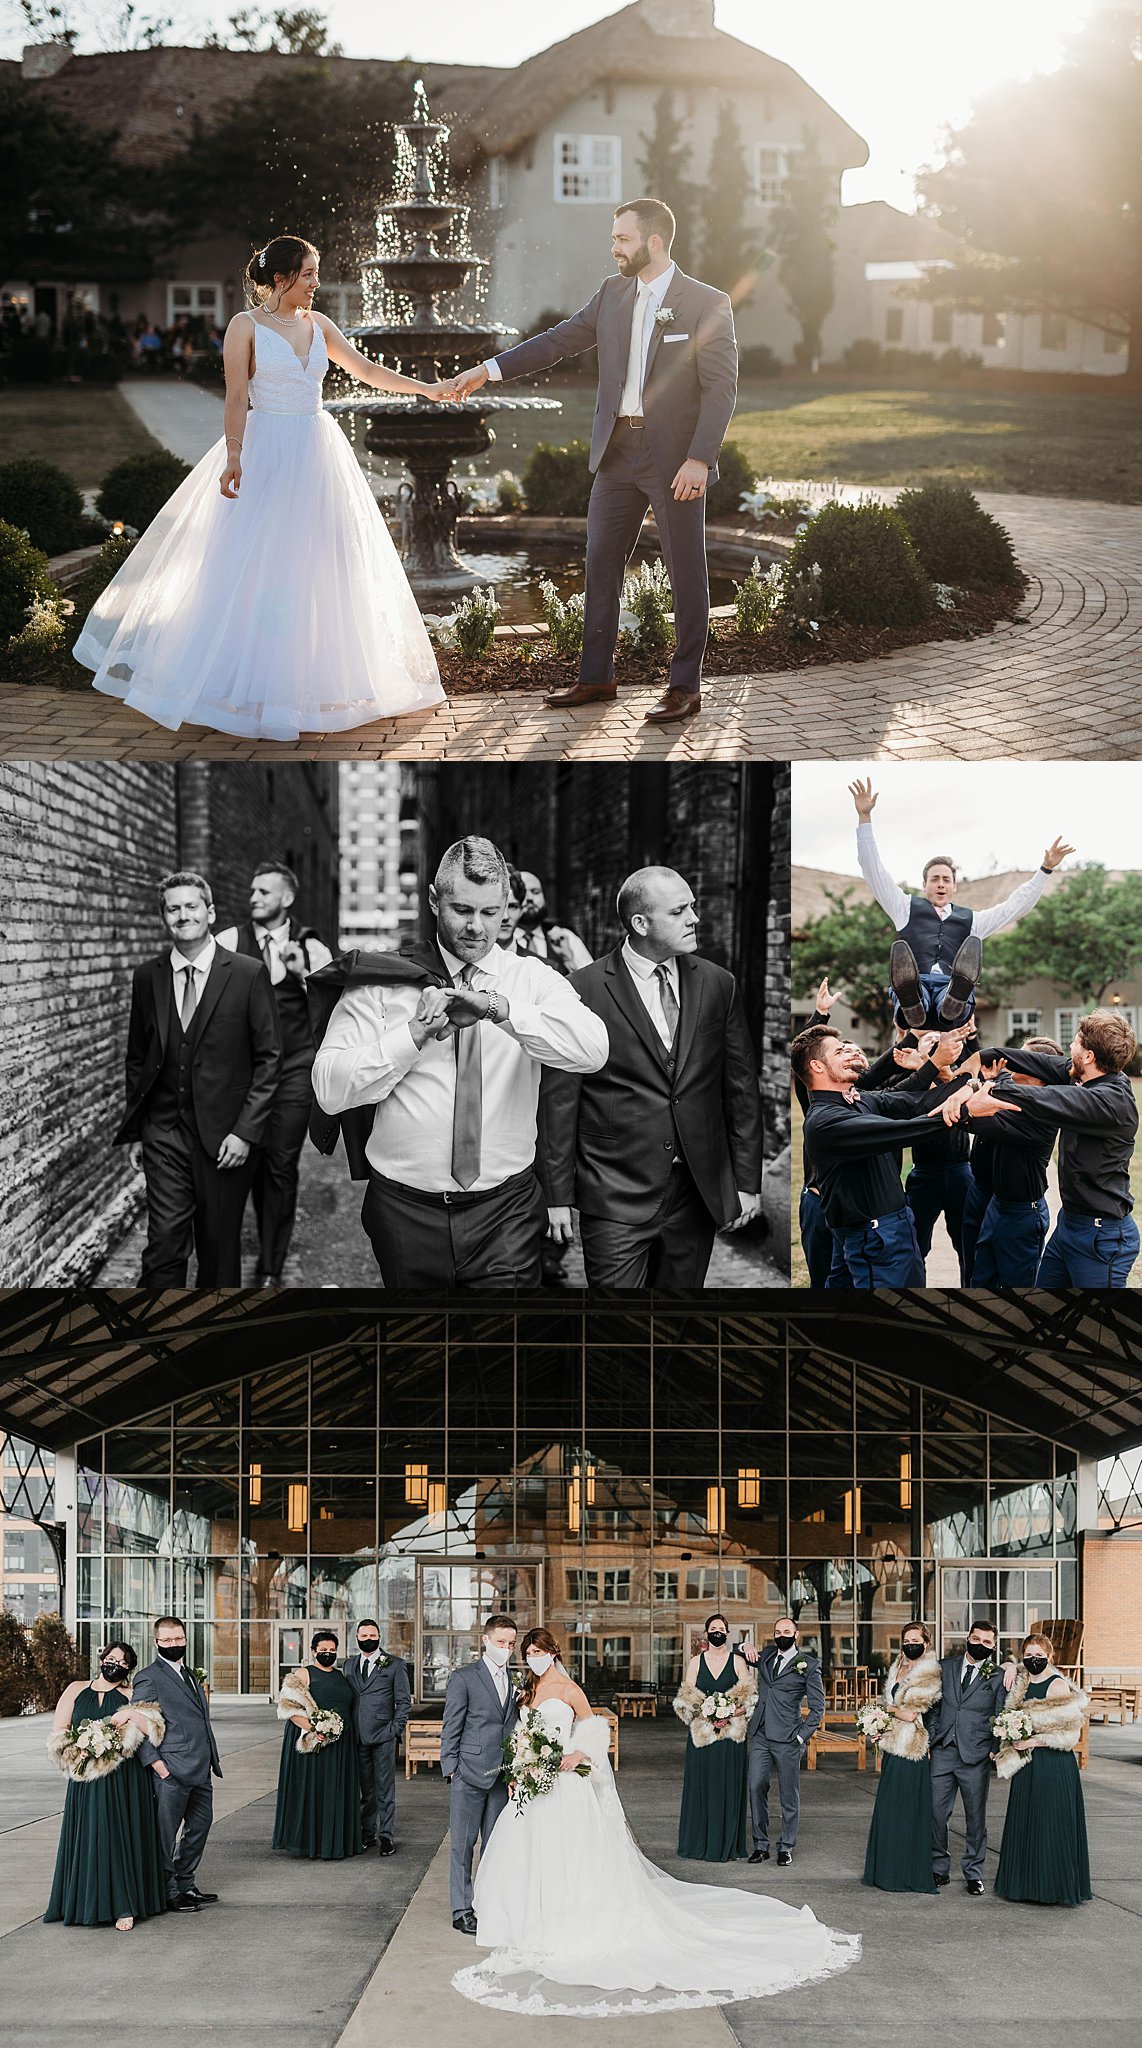 Wedding party photos at Minnesota wedding venues